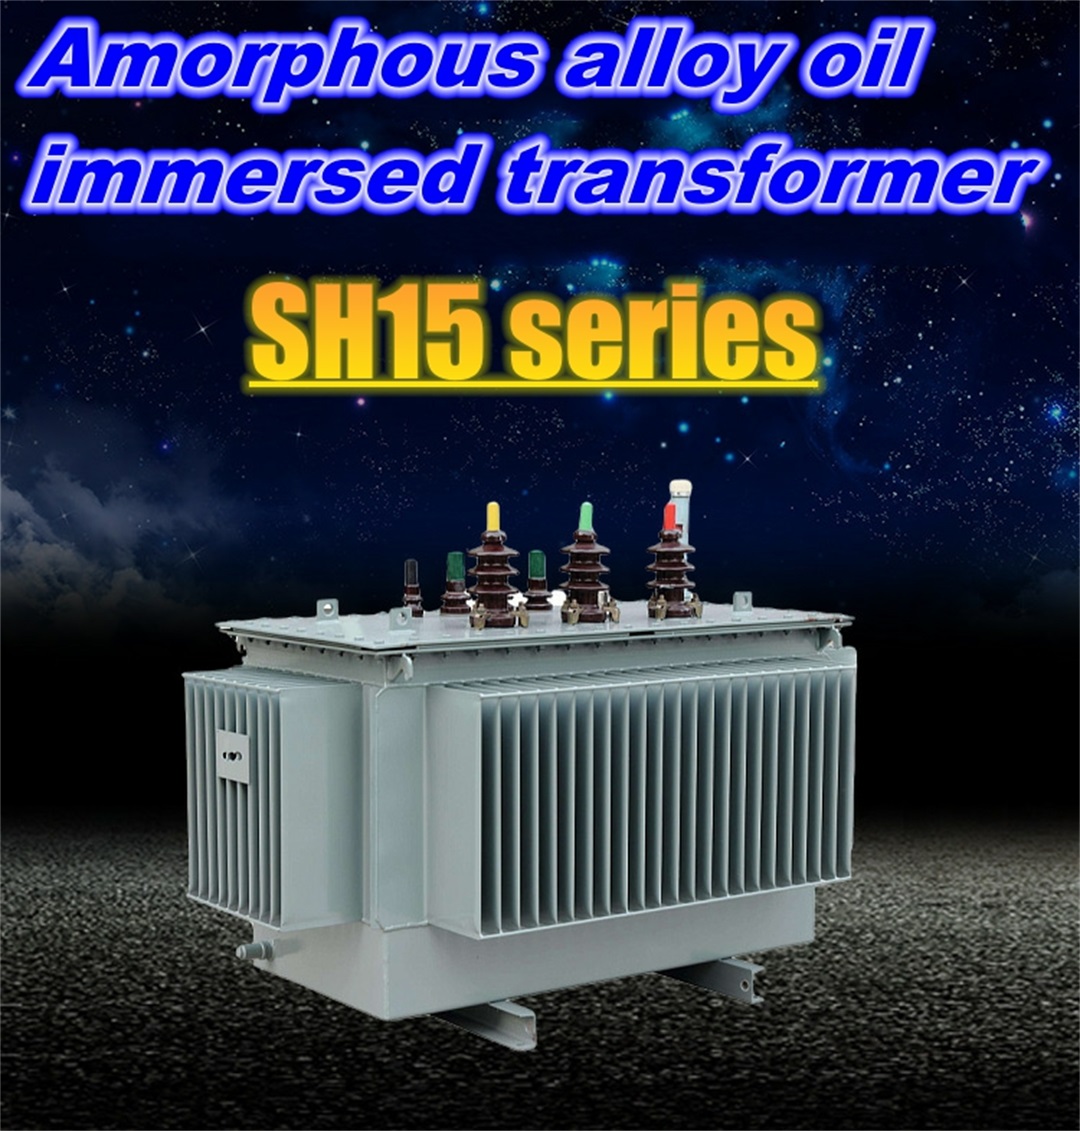 Amofasi alloy mafuta immersed transformer